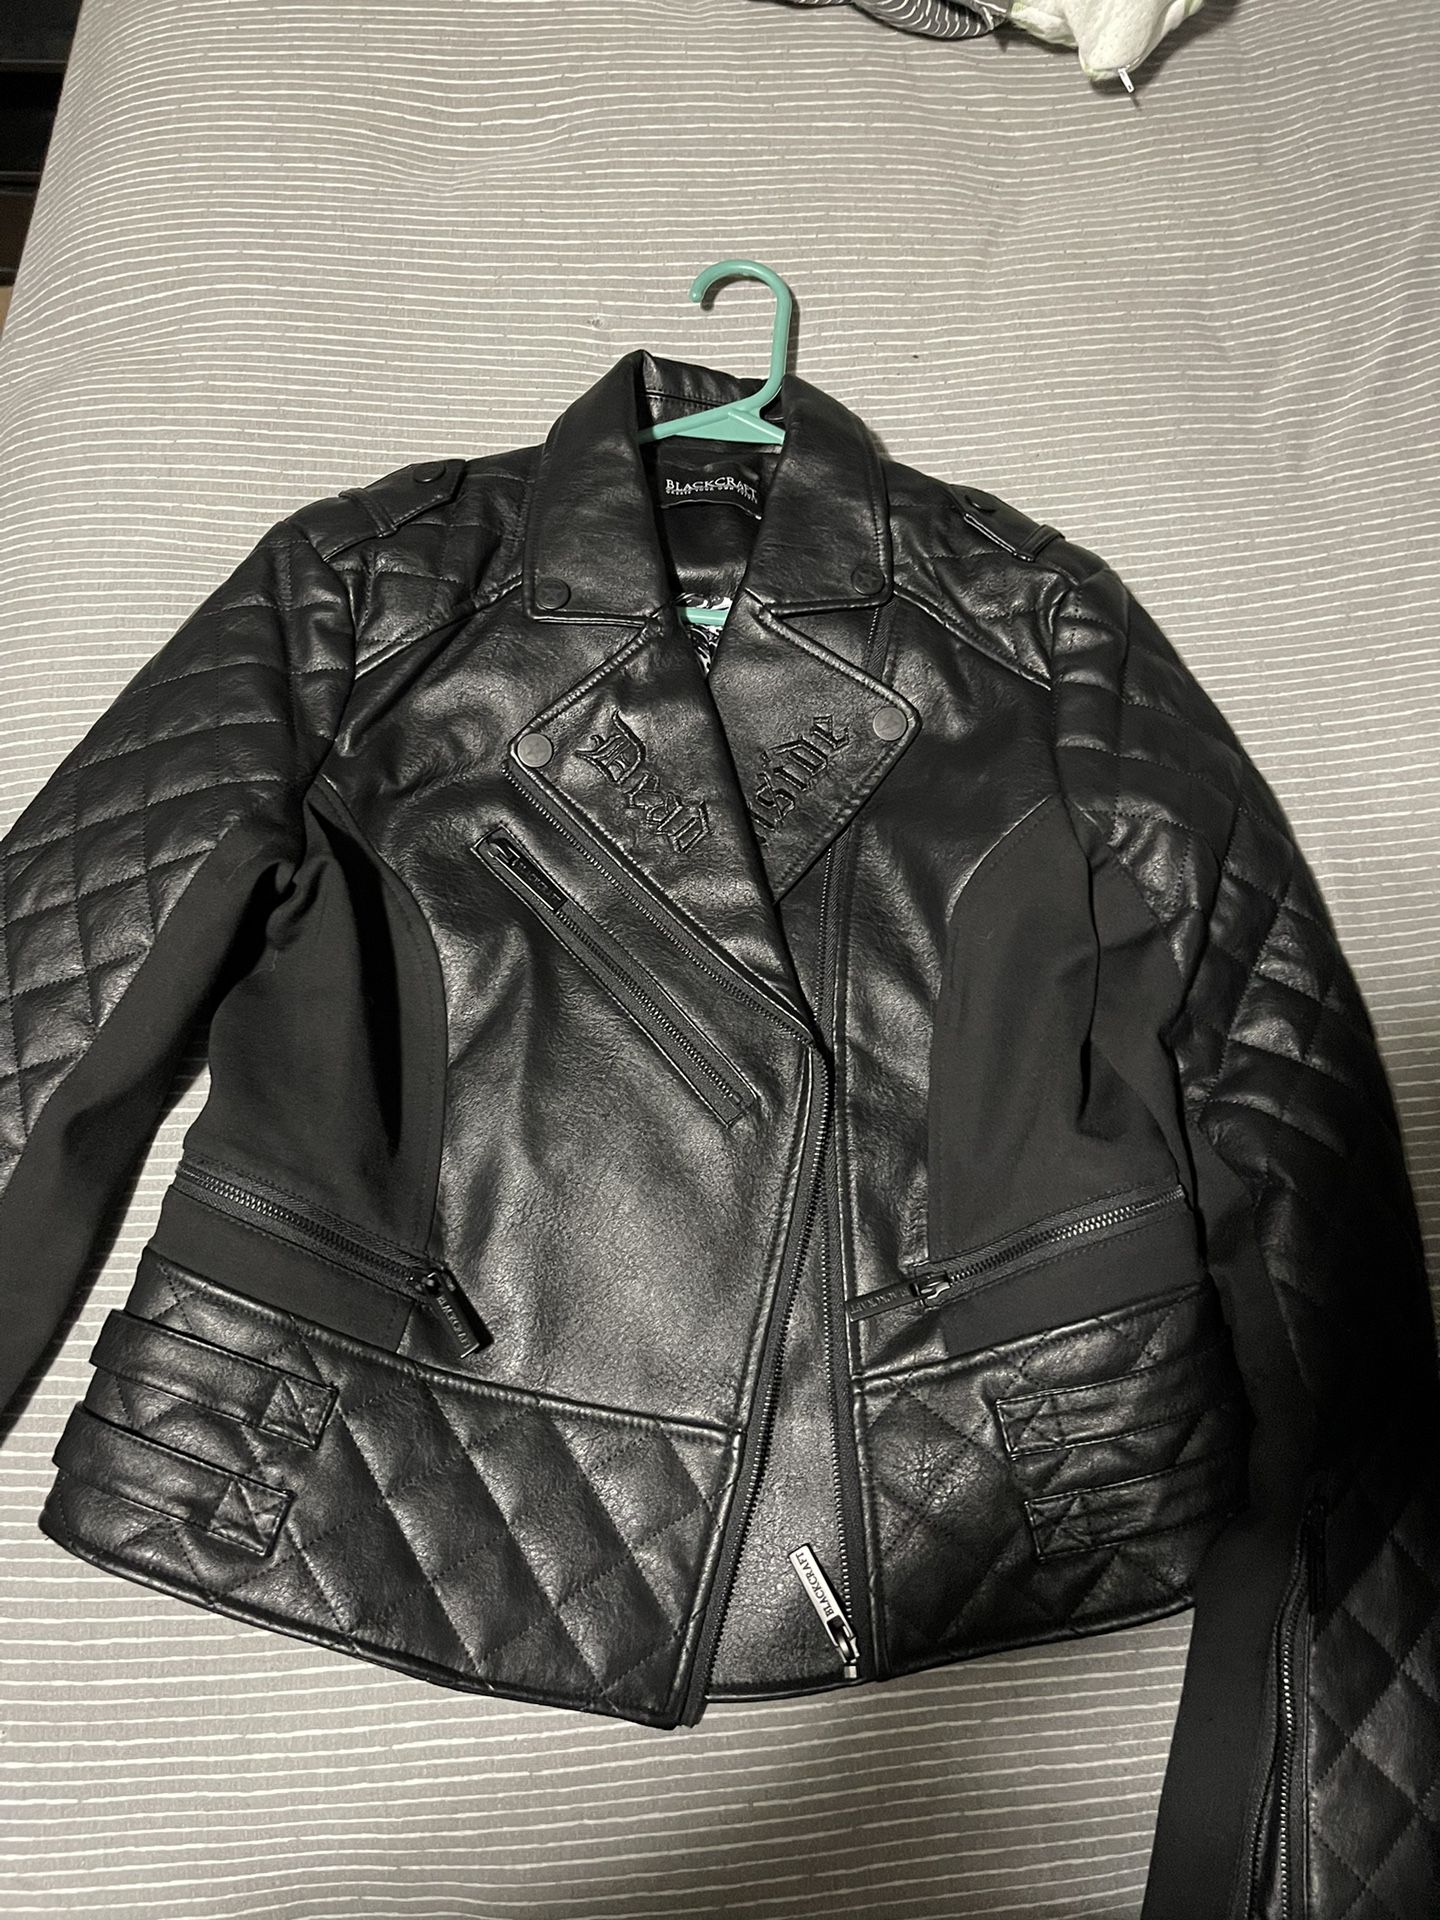 Blackcraft Leather Coat